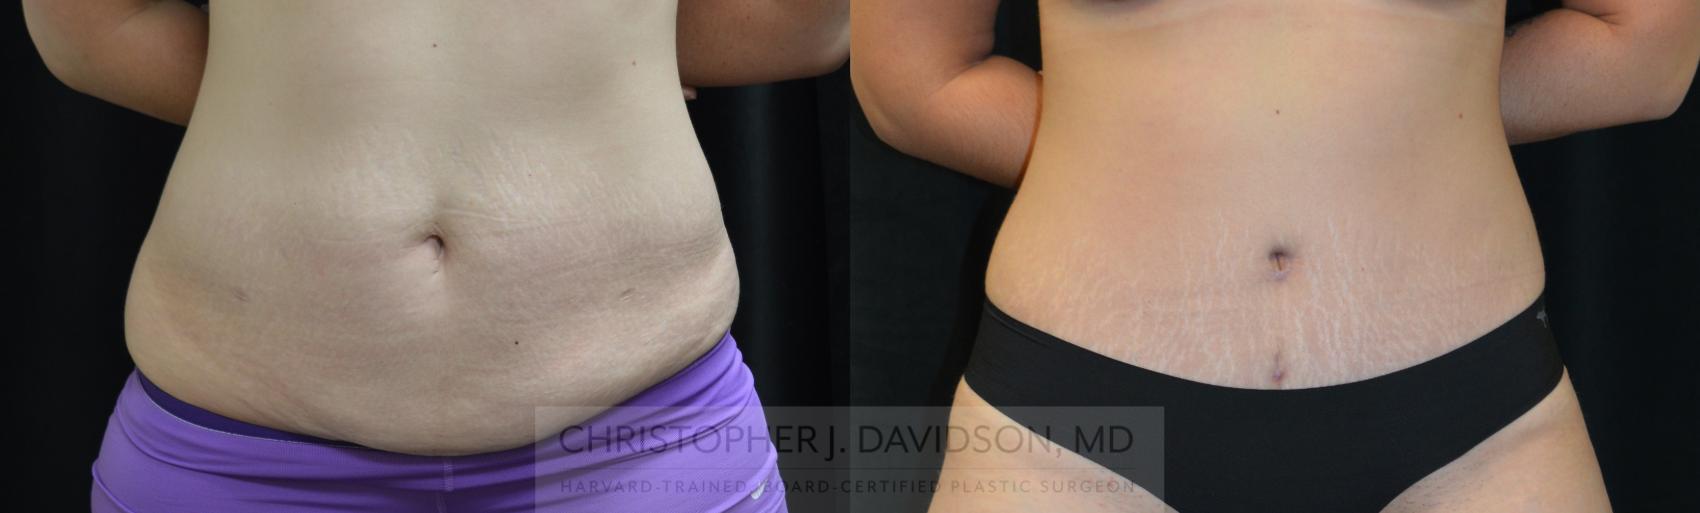 Liposuction Case 259 Before & After Front | Wellesley, MA | Christopher J. Davidson, MD